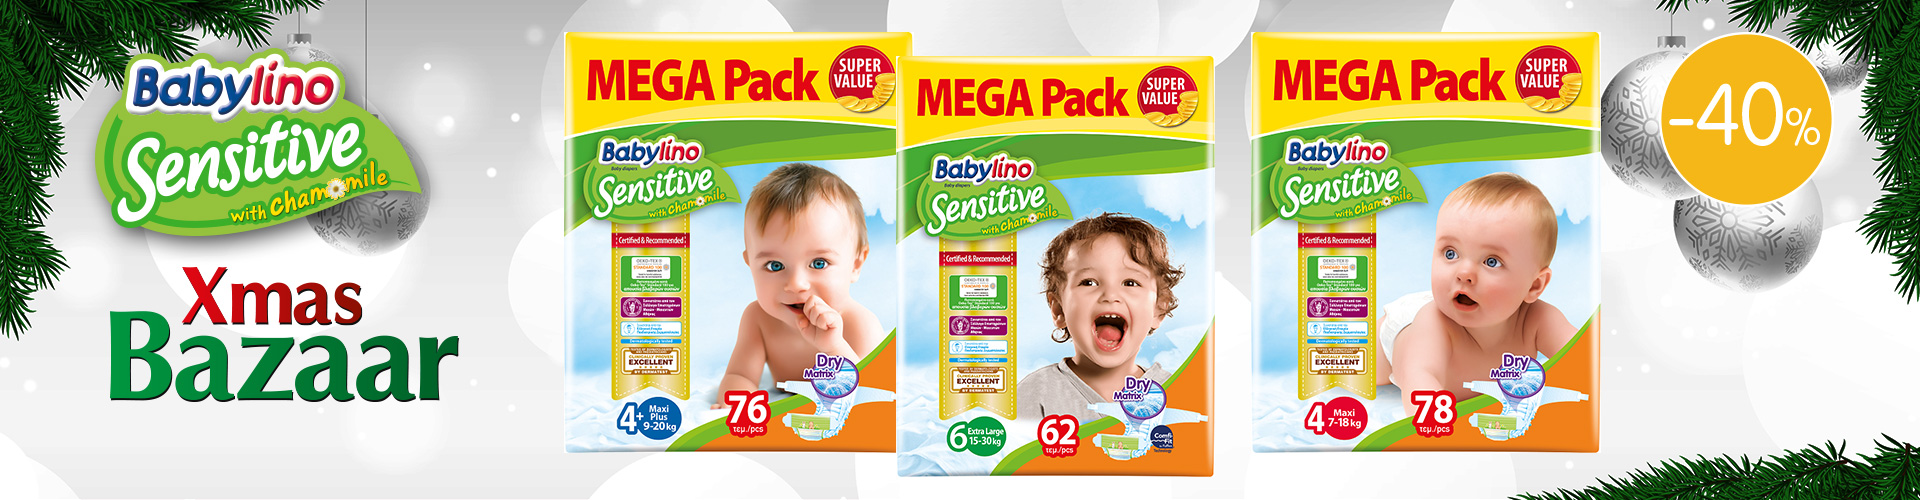 Babylino Mega Pack